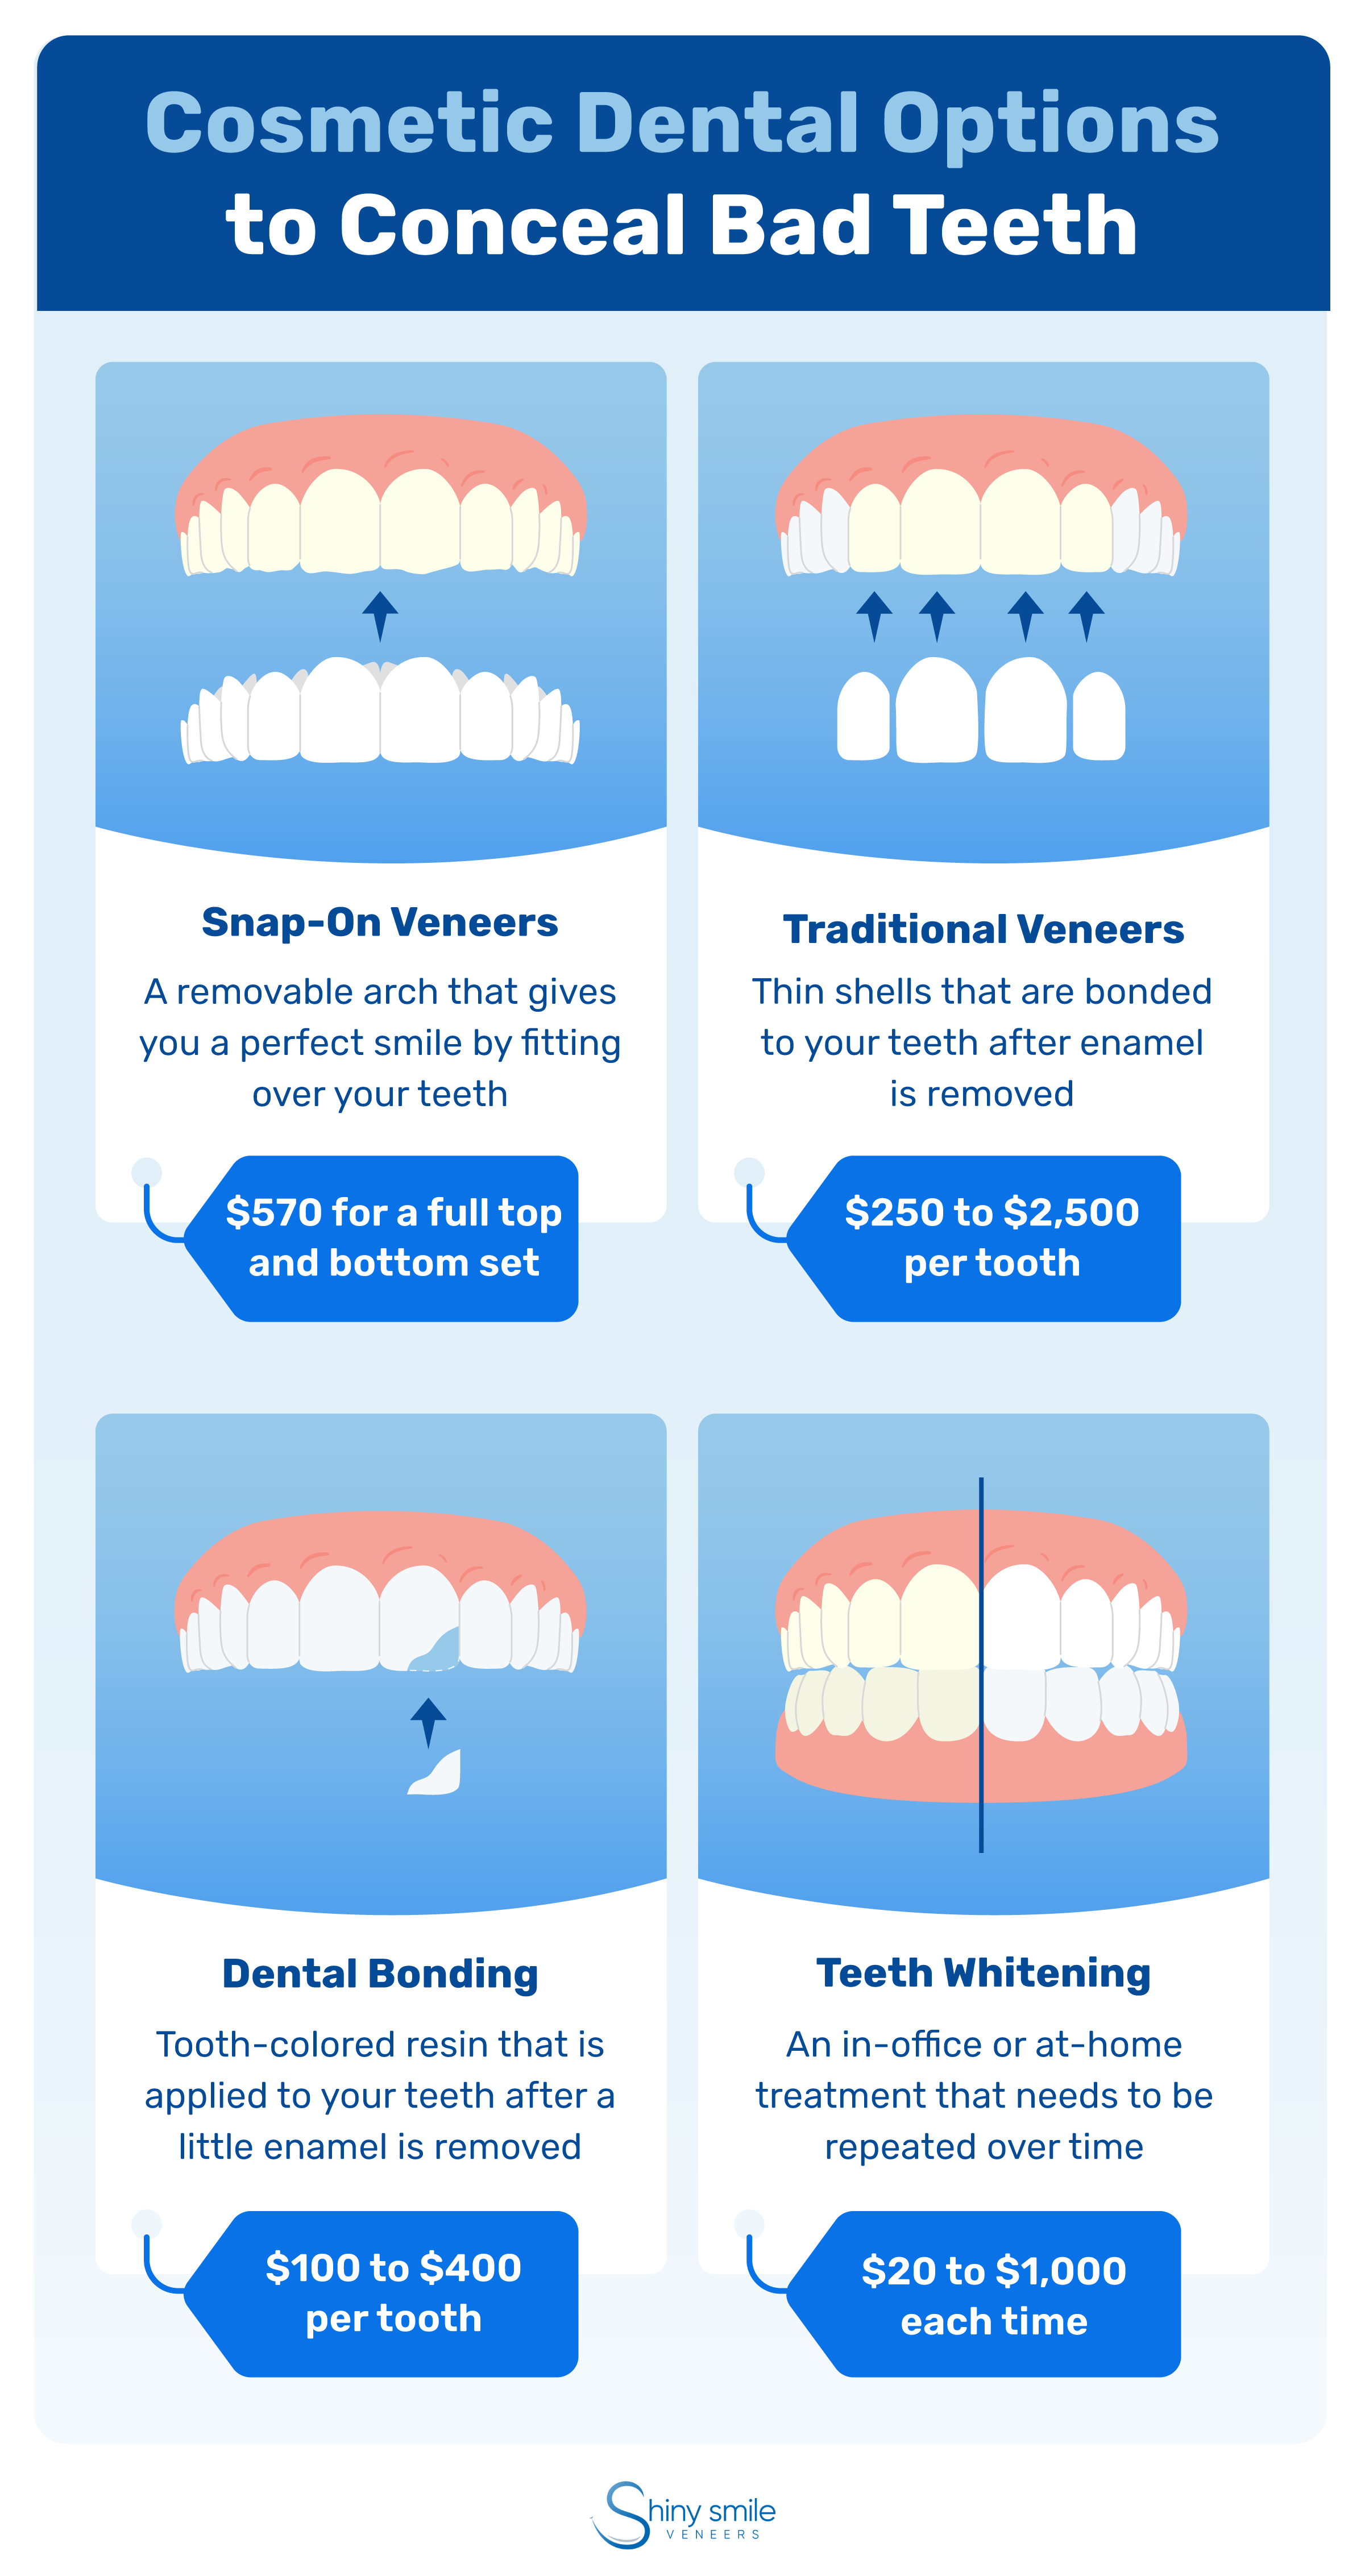 Cosmetic dental options to conceal bad teeth